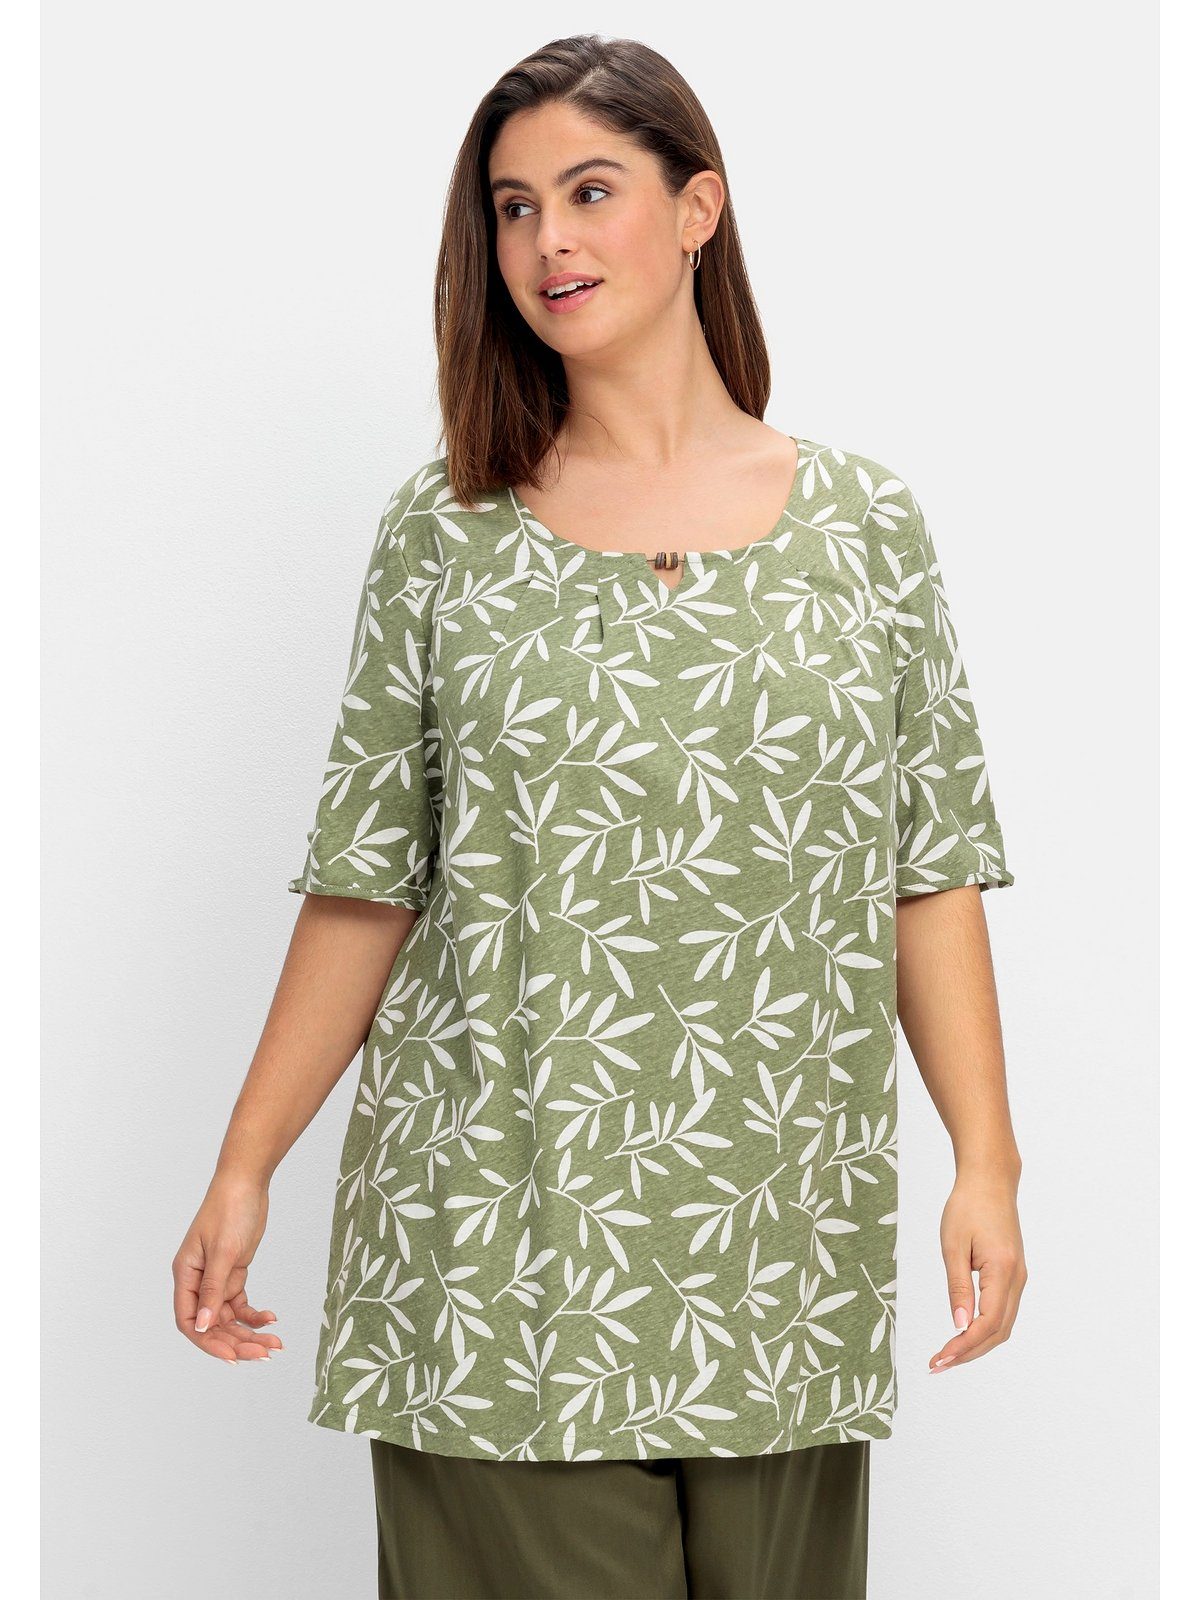 Sheego T-Shirt mit Große Blätterprint, im Leinen-Mix khaki gemustert Größen